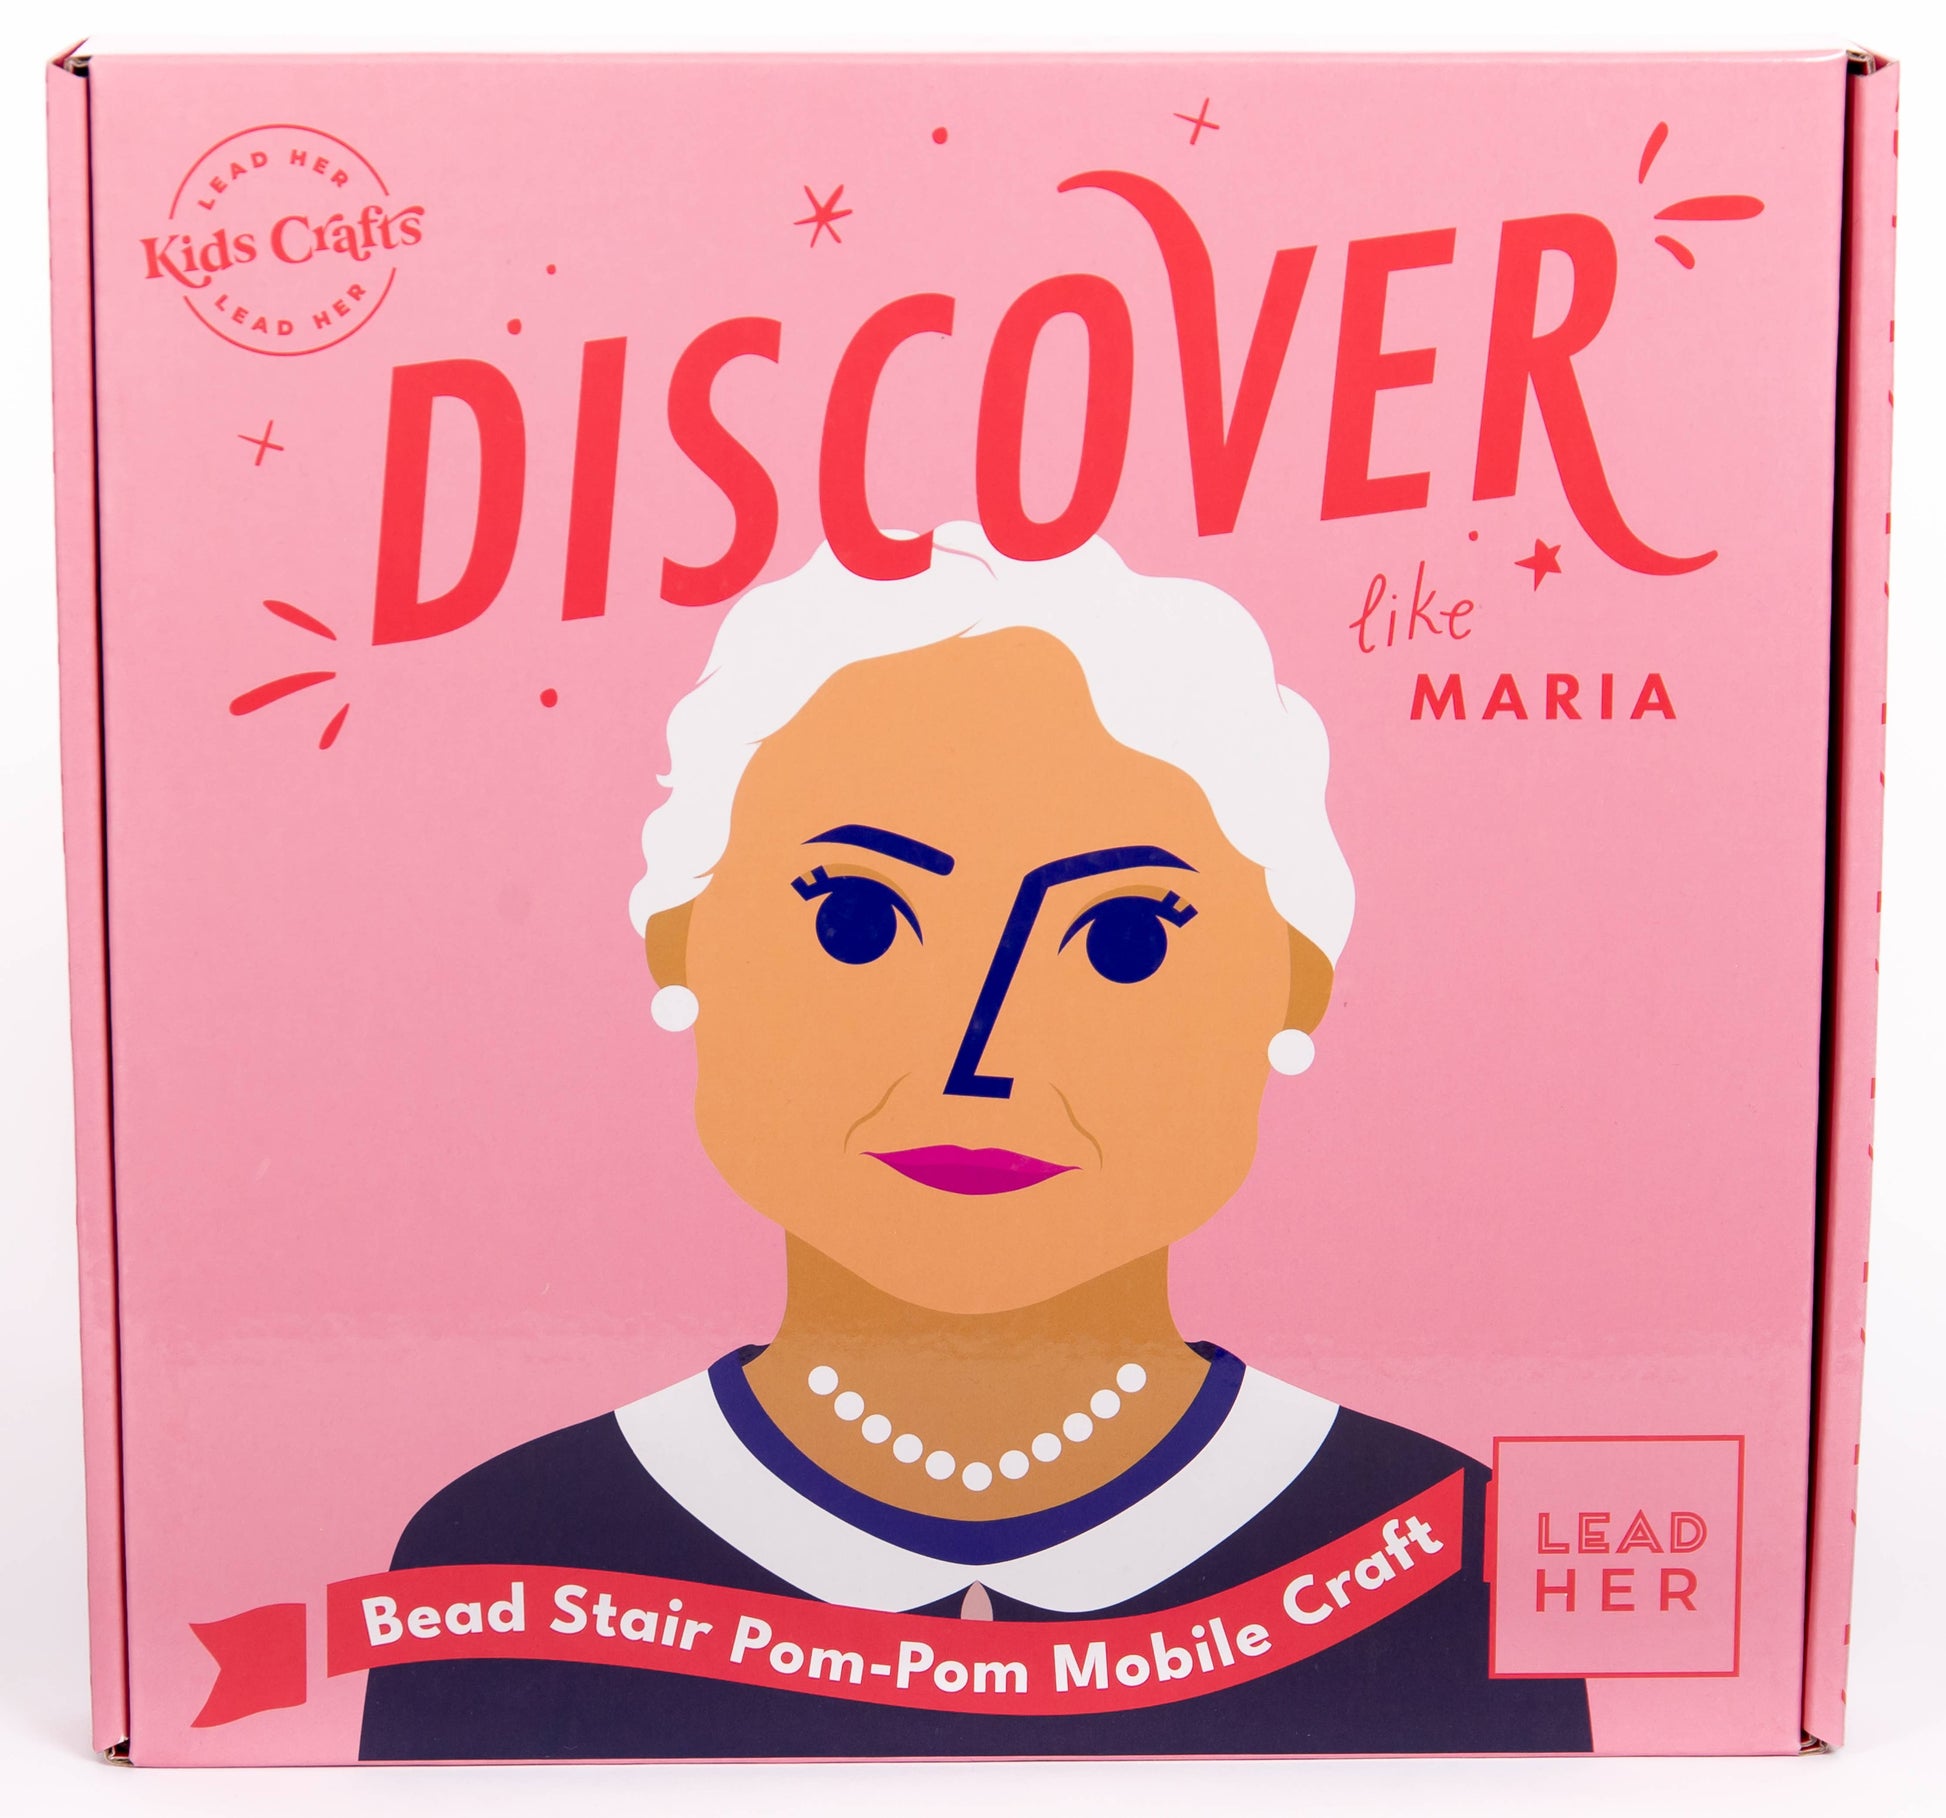 Box image for the “DISCOVER like Maria” Pom Pom Mobile Craft Kit.